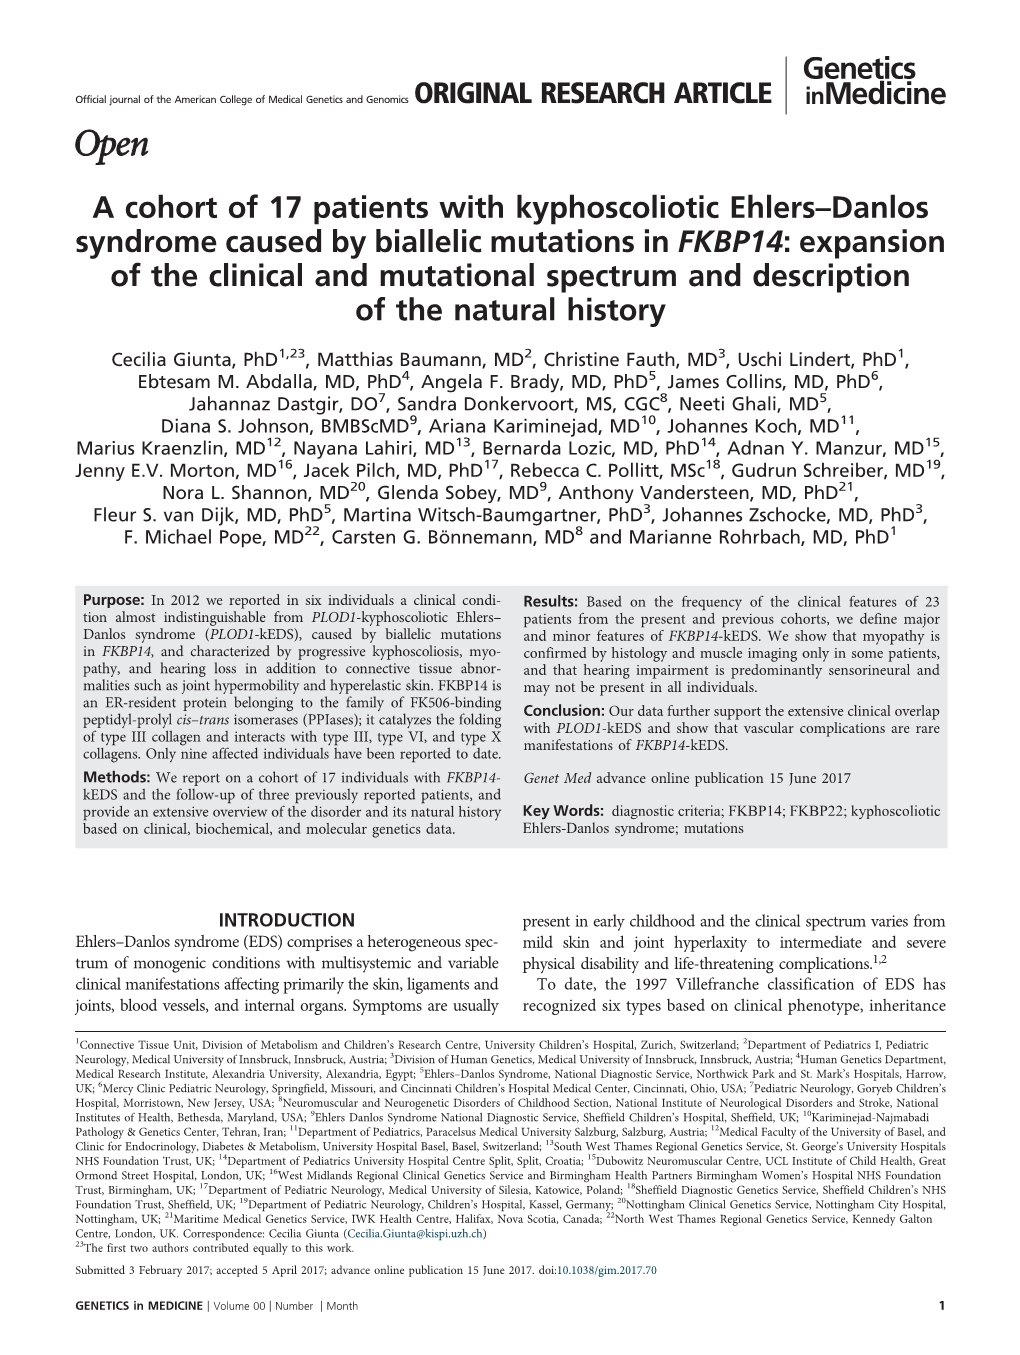 A Cohort of 17 Patients with Kyphoscoliotic Ehlers-Danlos